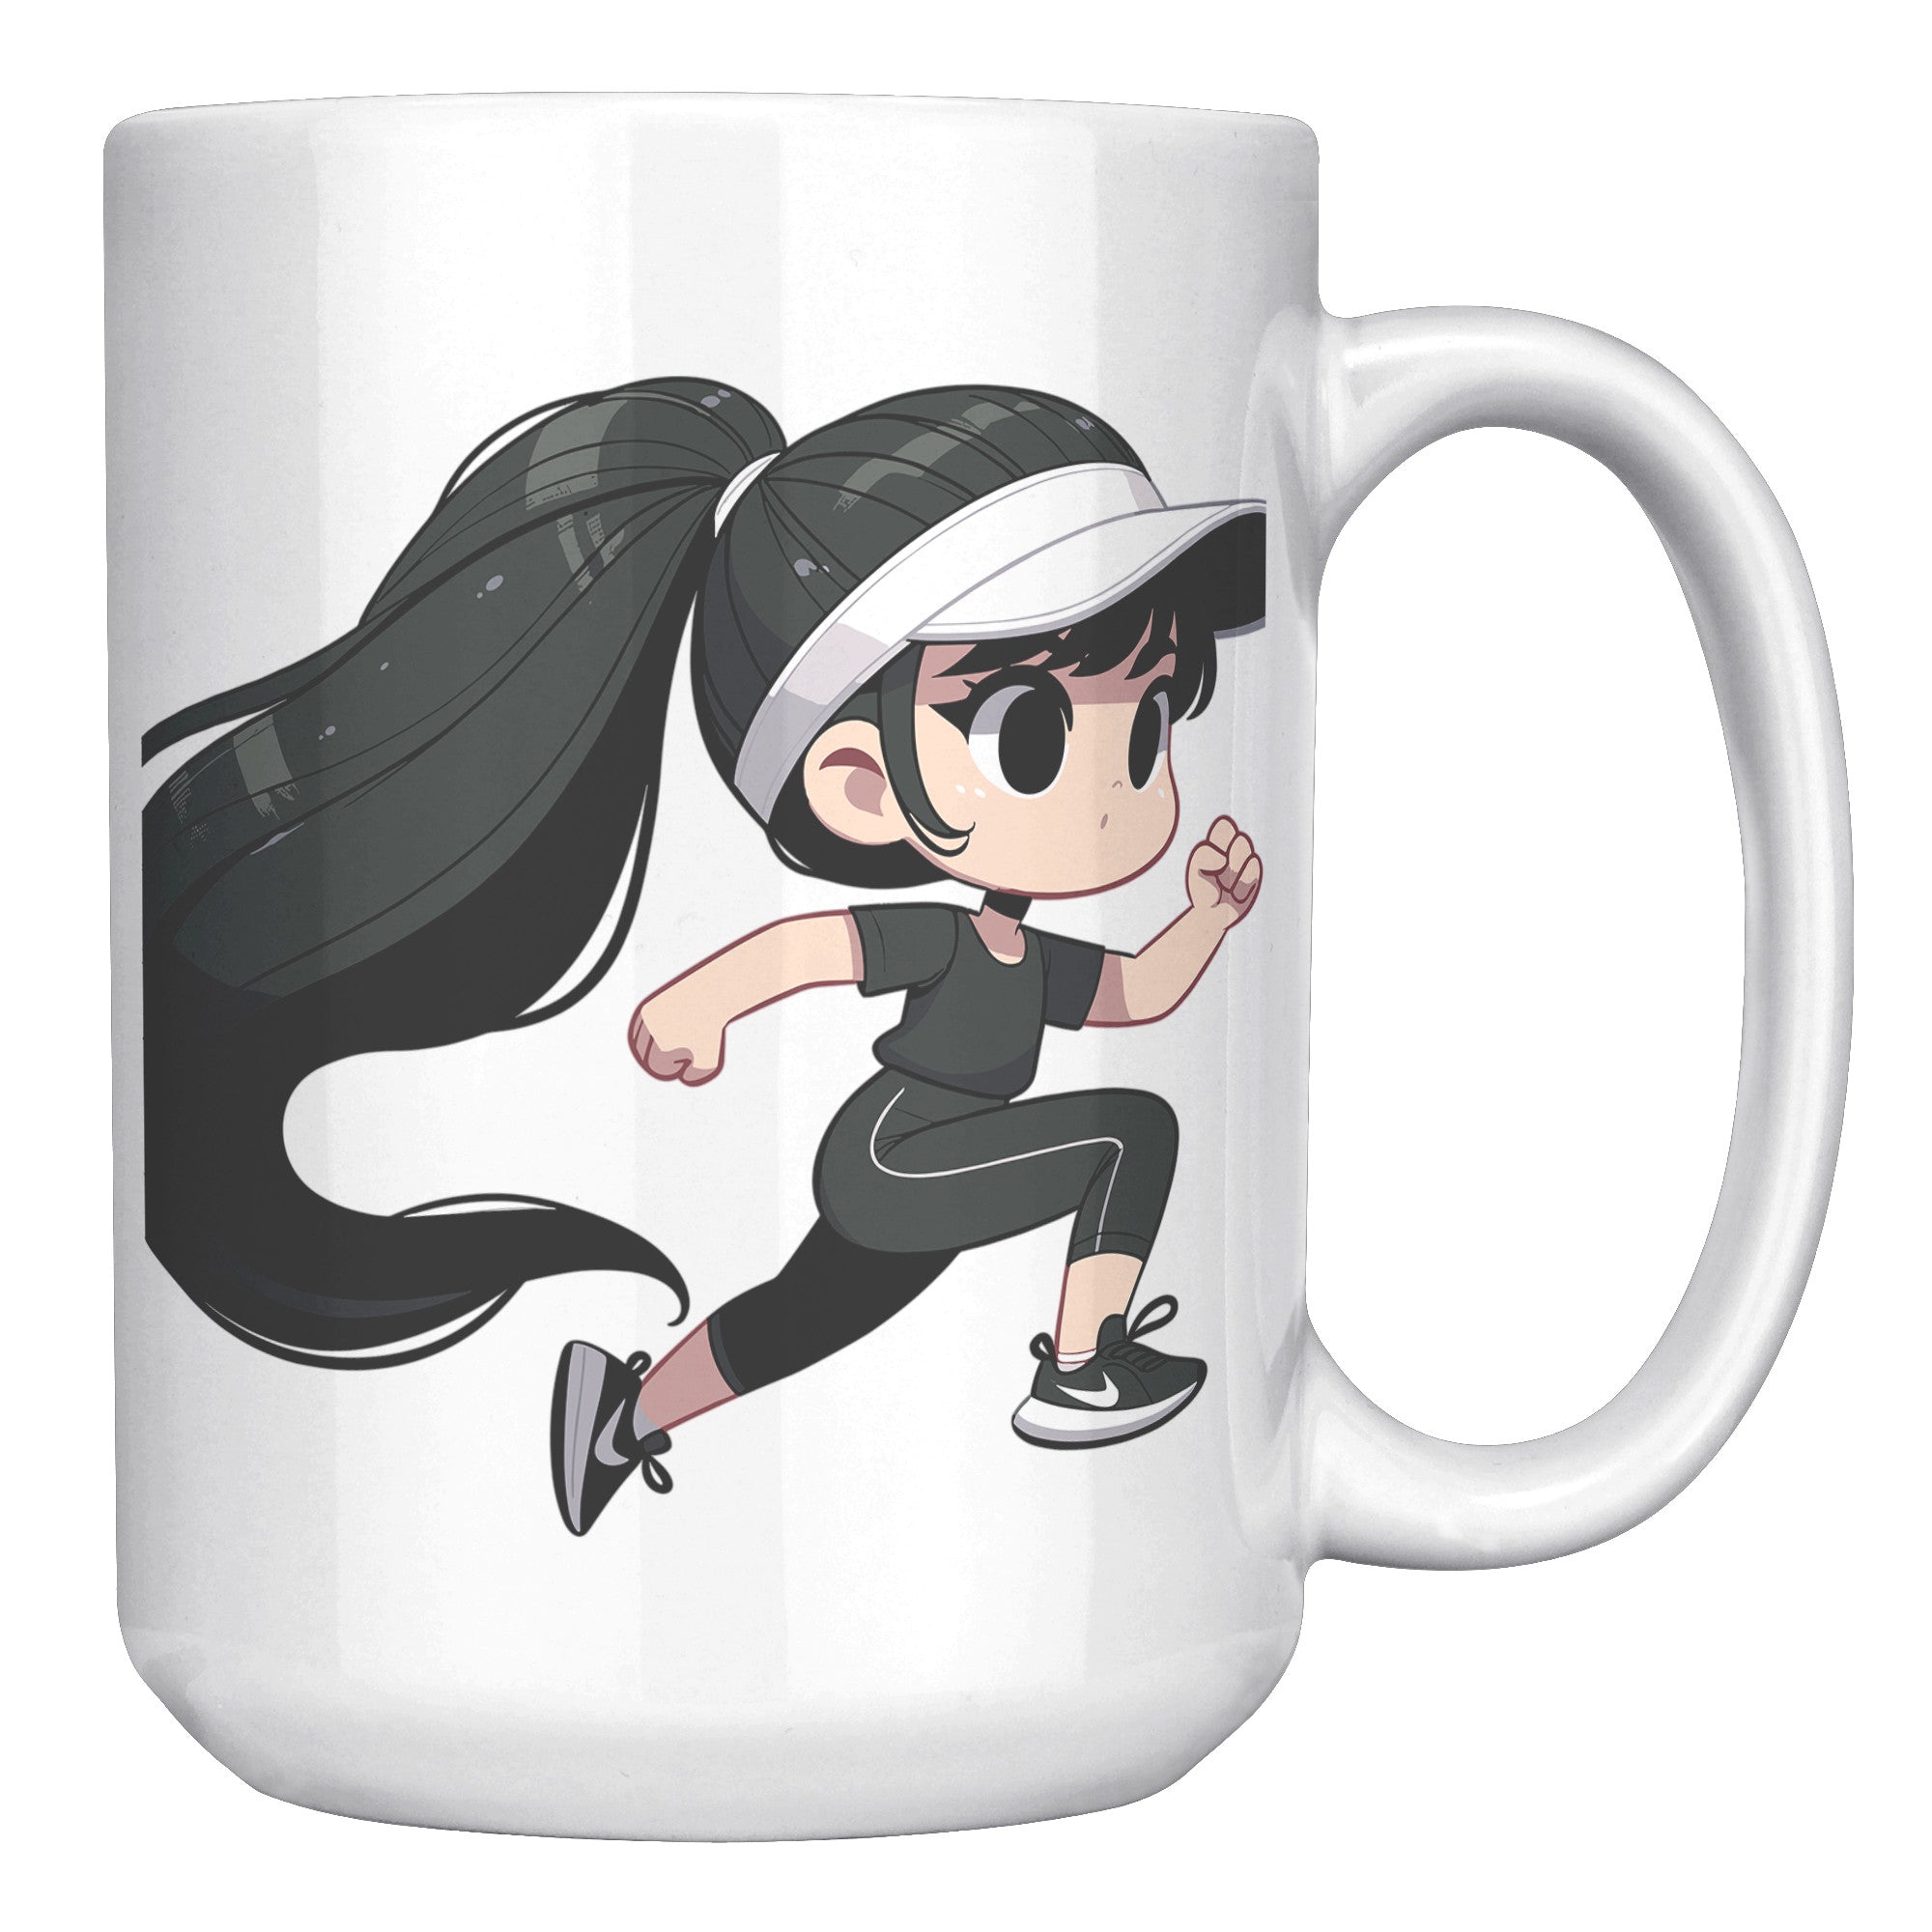 "Female Runner Coffee Mug - Inspirational Running Quotes Cup - Perfect Gift for Women Runners - Motivational Marathoner's Morning Brew" - E1